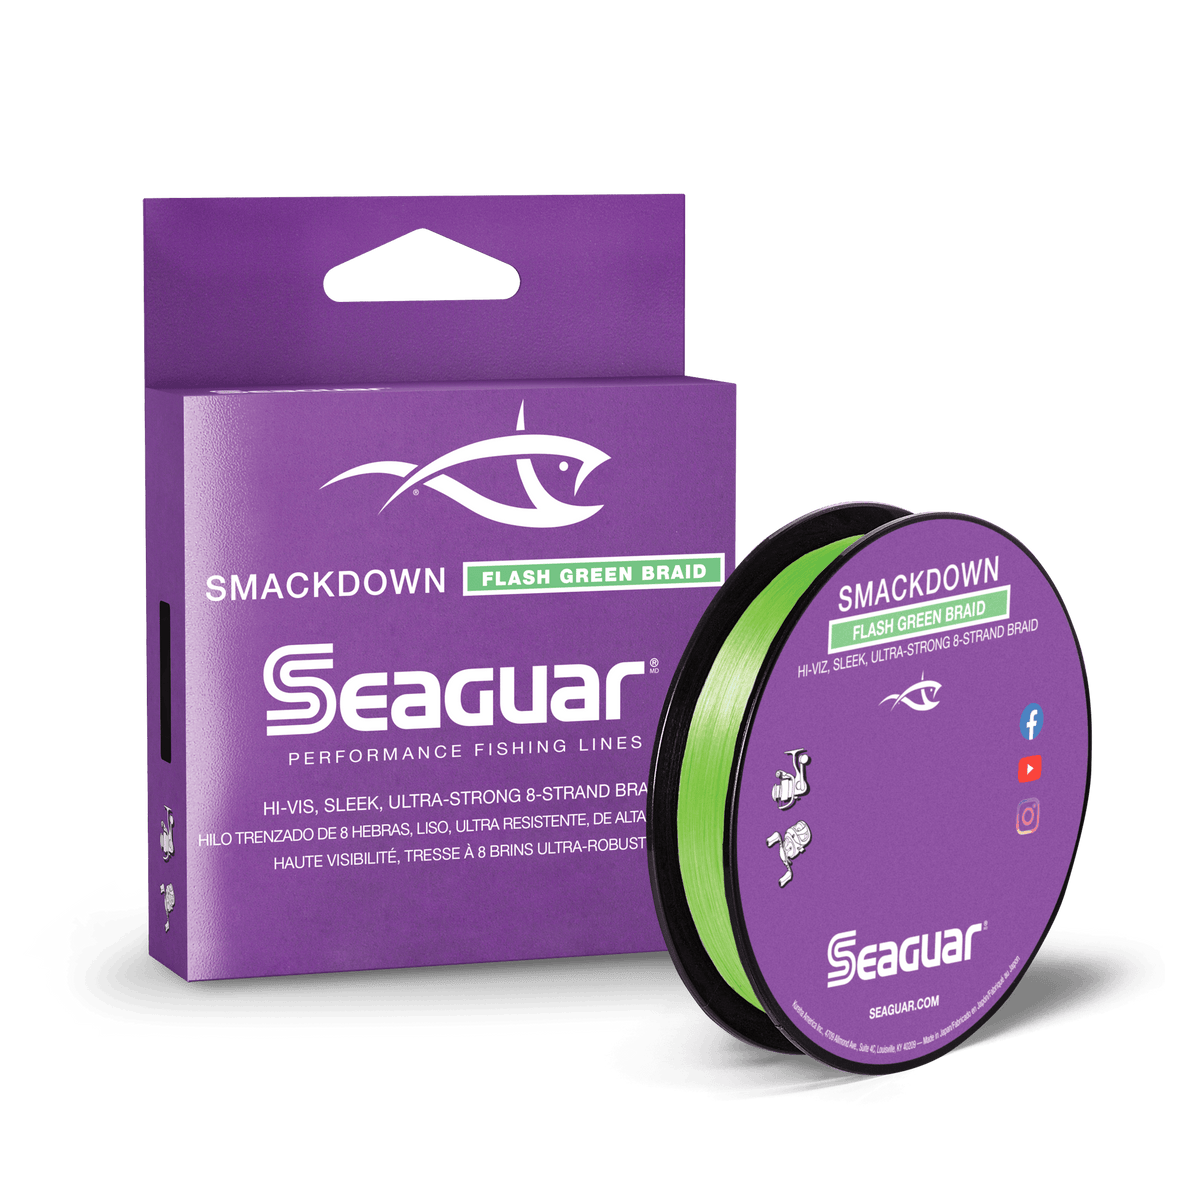 Seaguar 80 lbs Label Fishing Line 25 - Pink